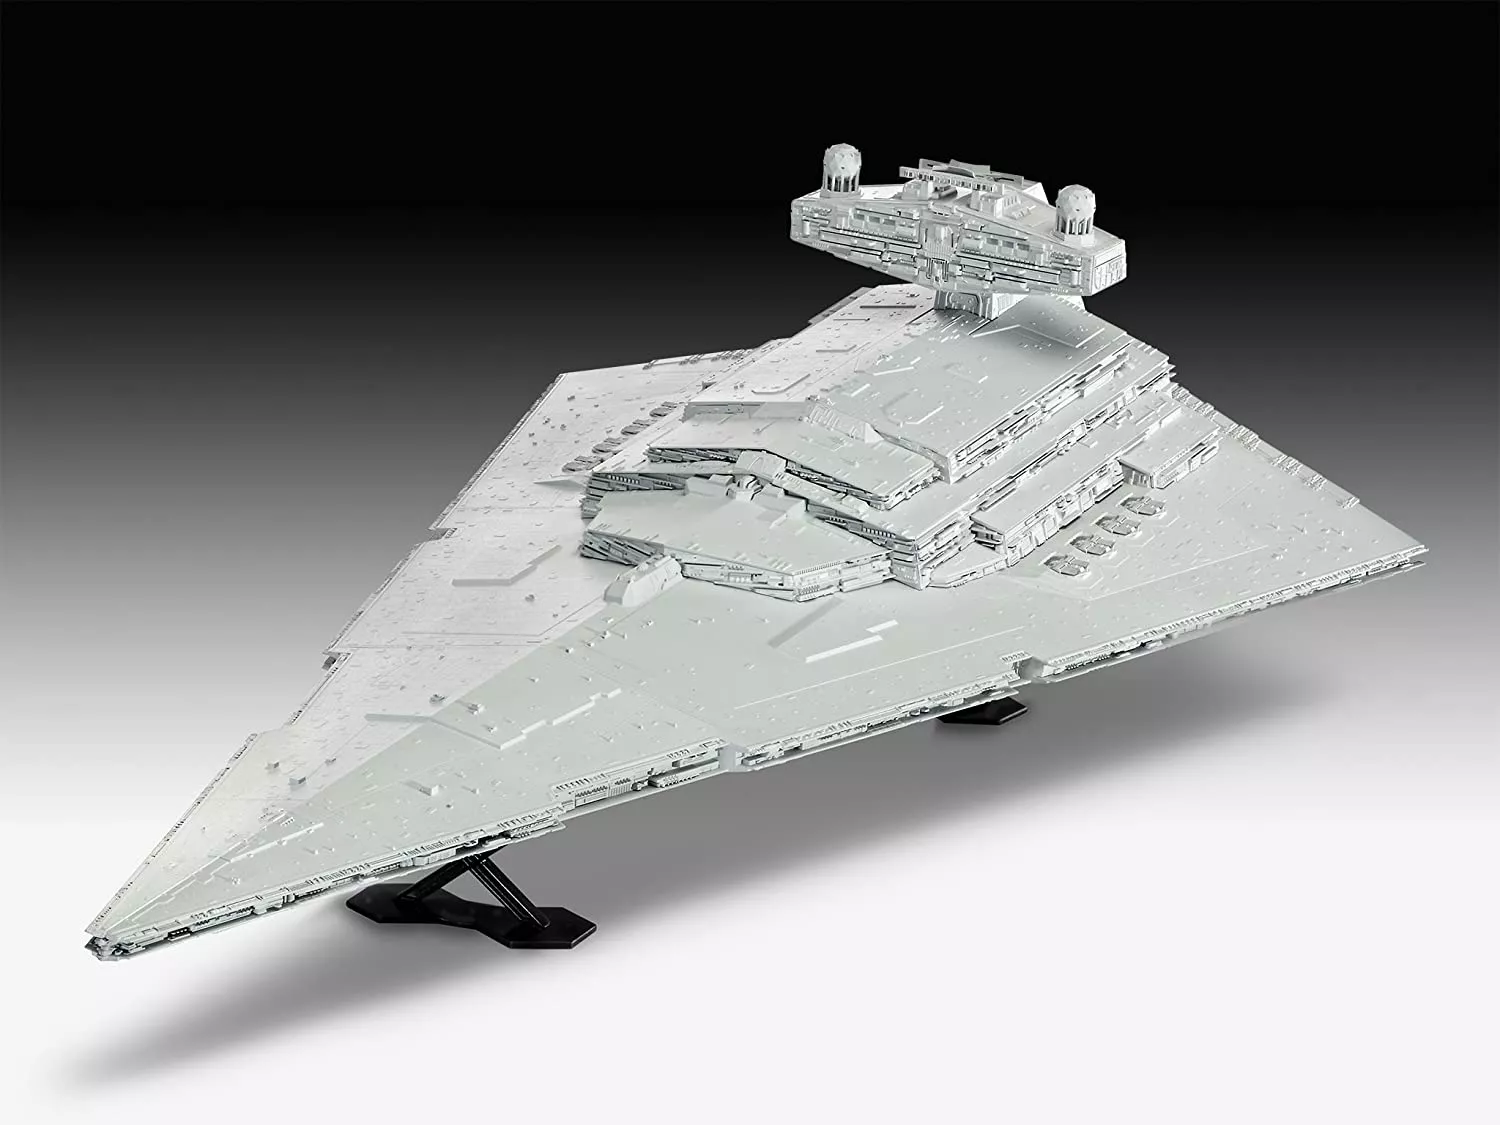 Revell 06719 Imperial Star Destroyer - Star Wars 1:2700 Star Destroyer